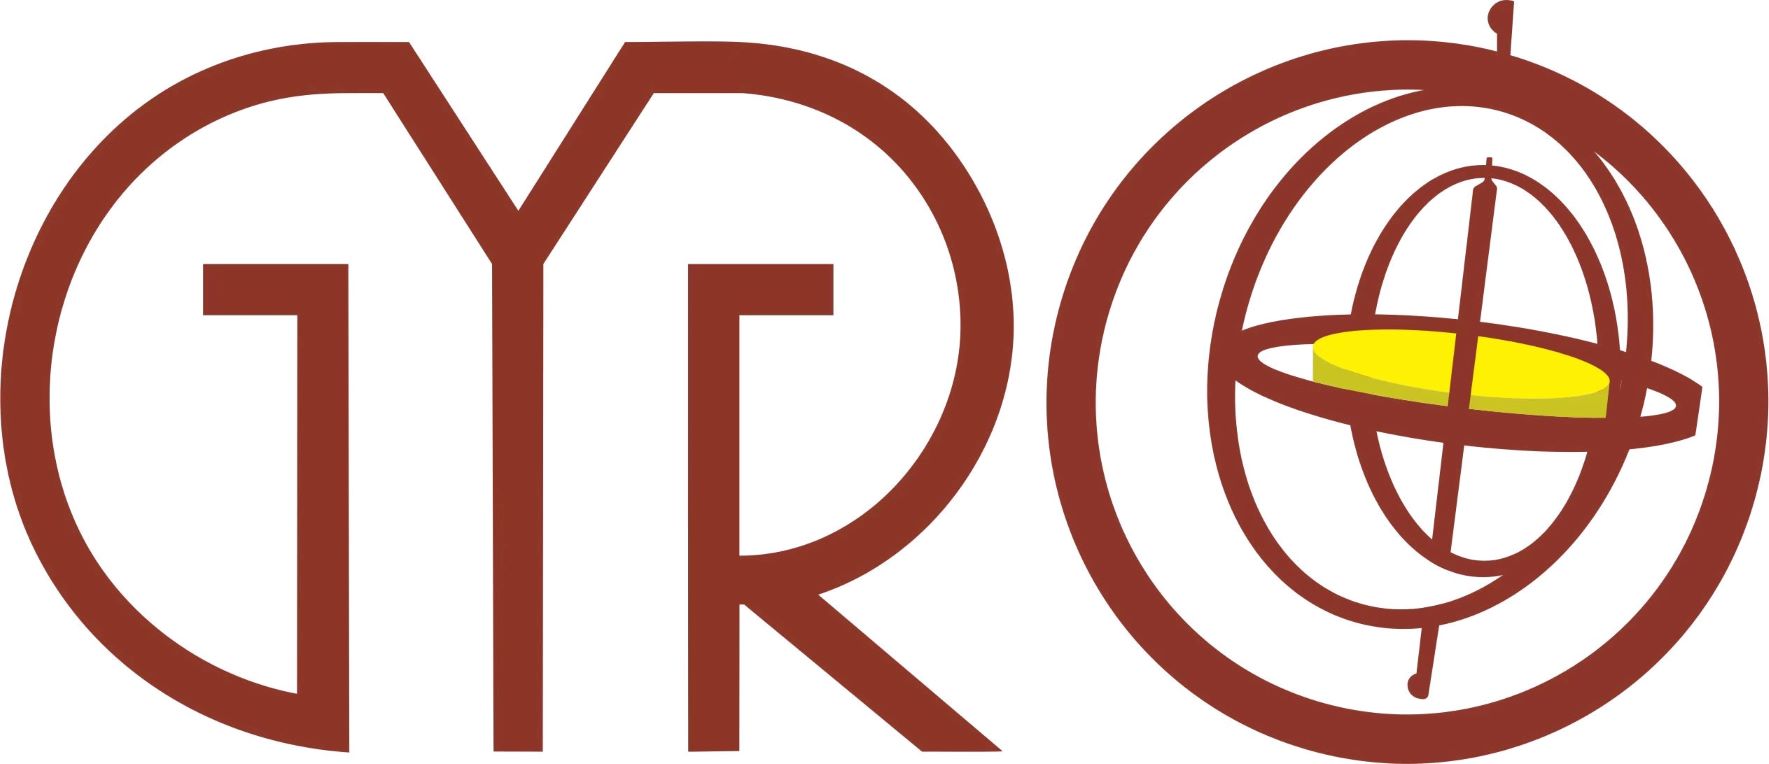 Gyromatic Innovation Private Limited company logo